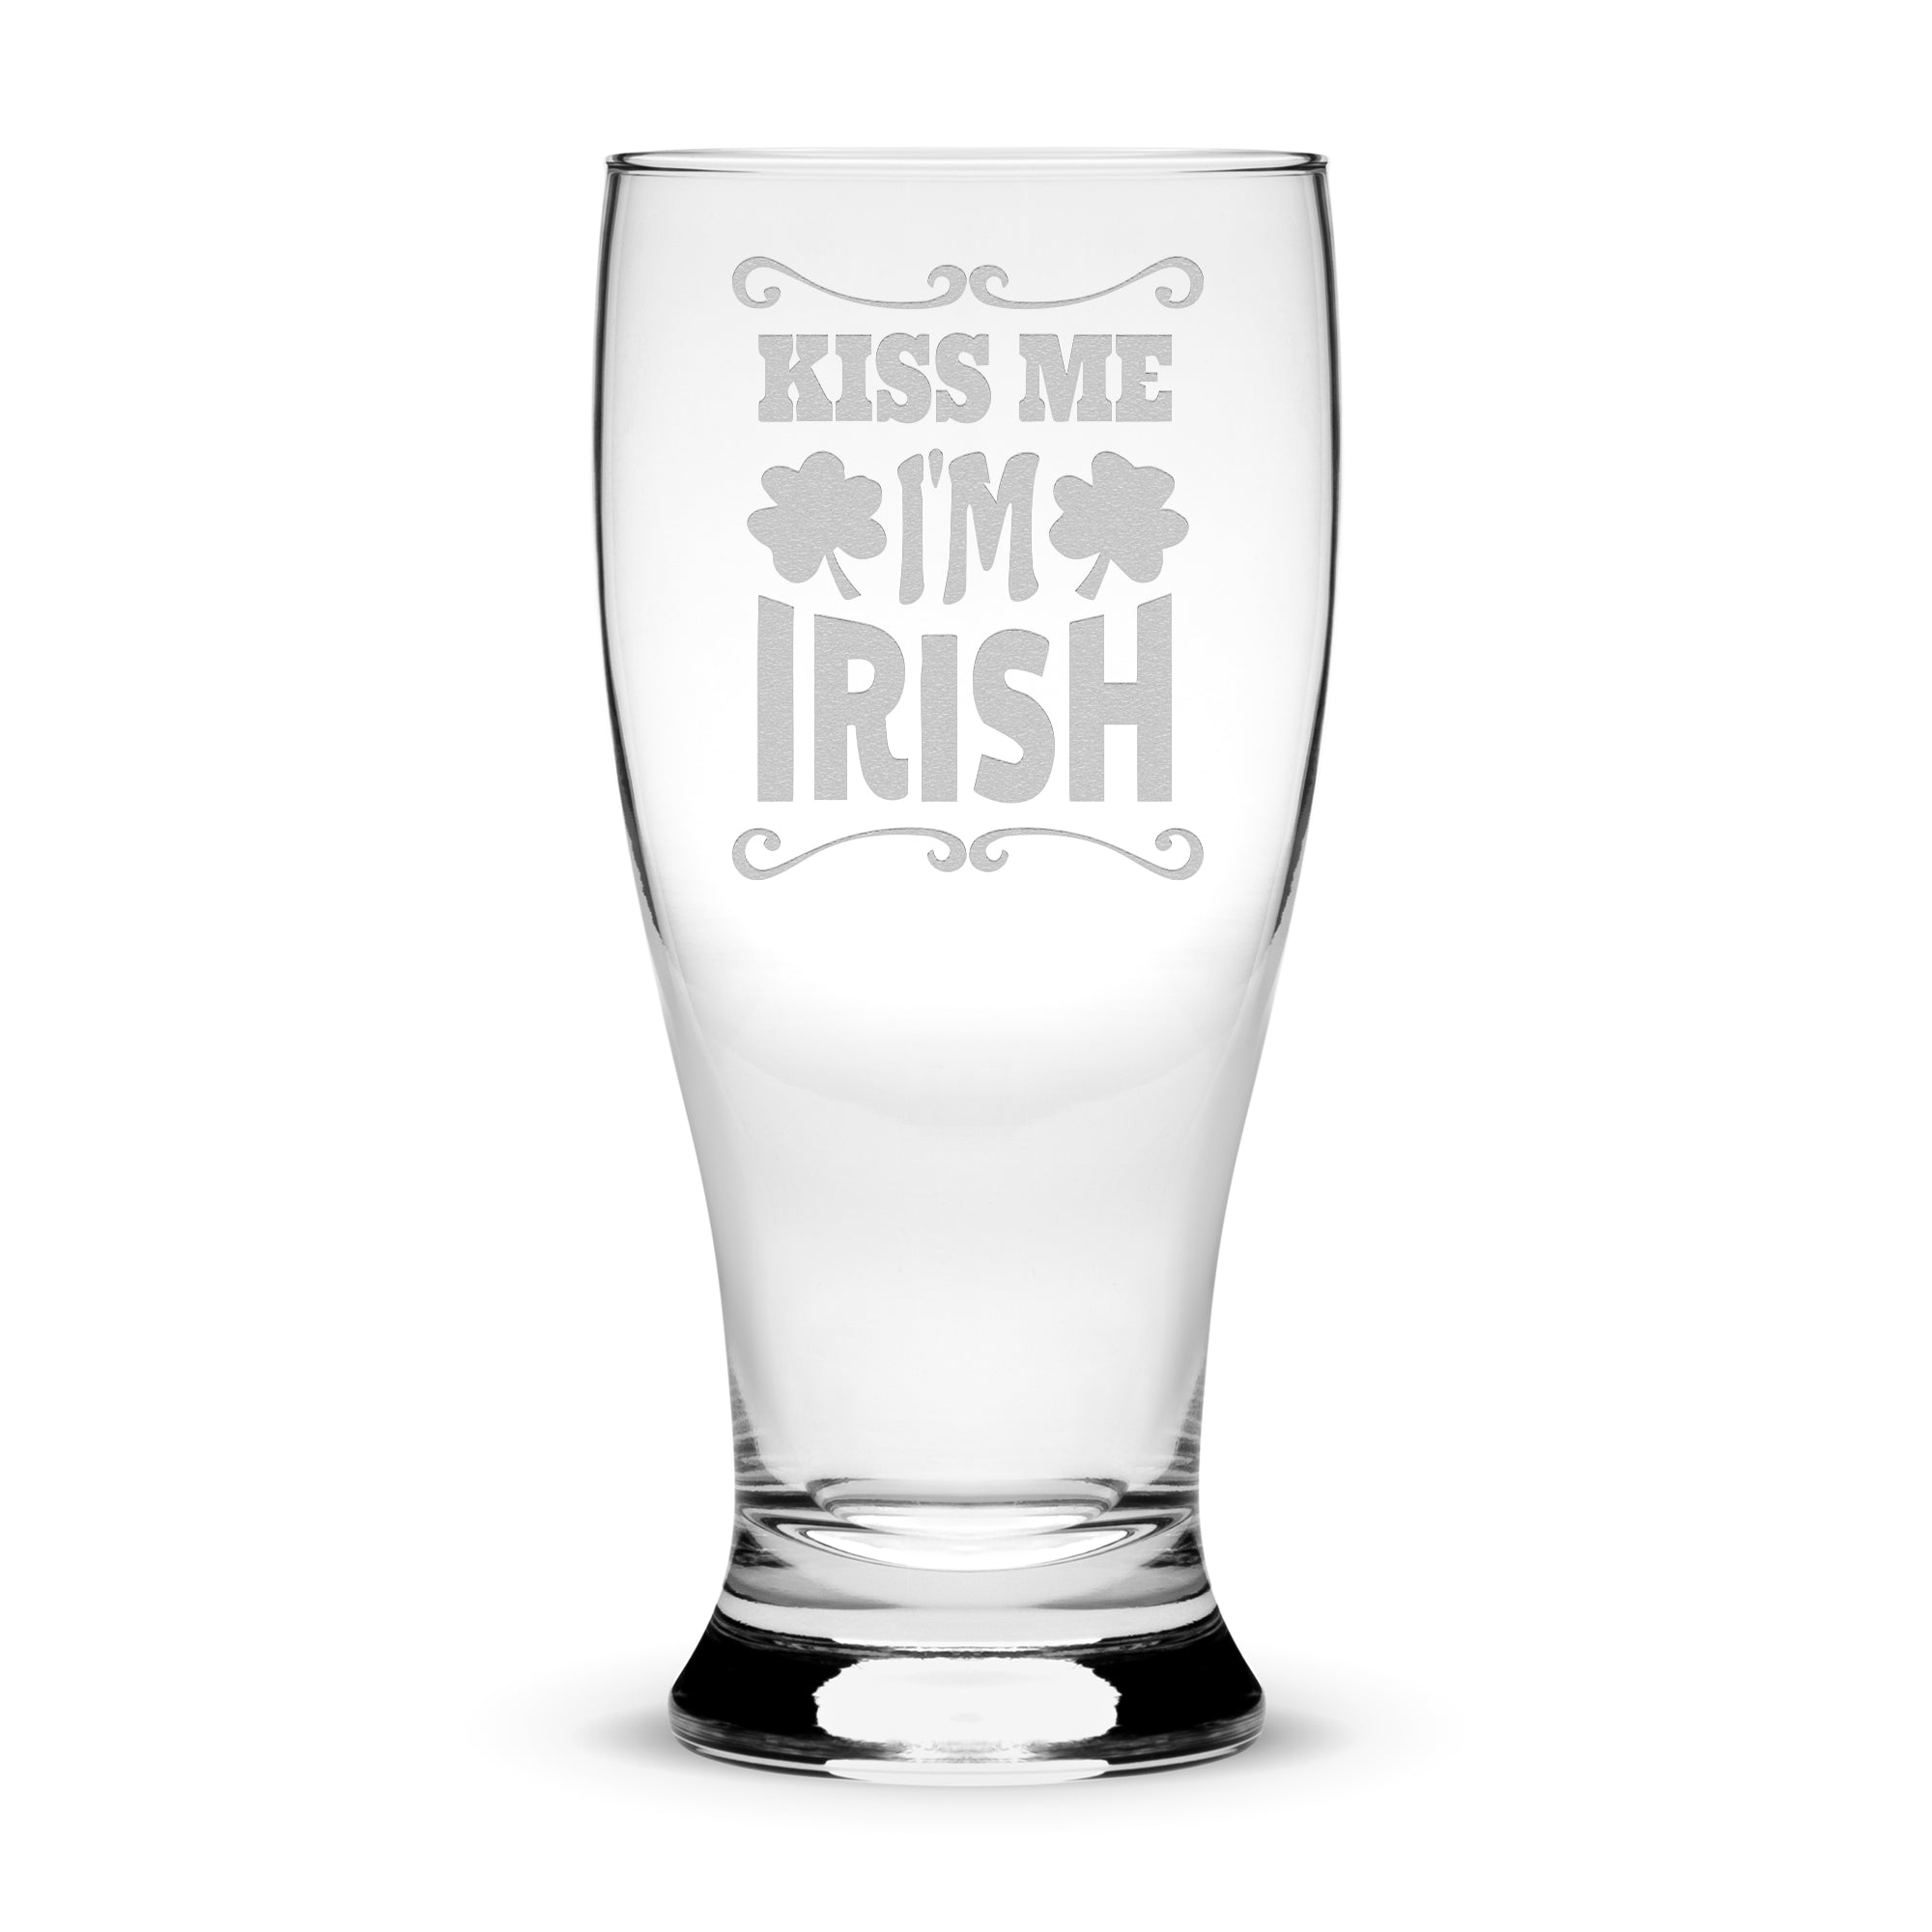 Premium Etched Pilsner Glass, Kiss Me I'm Irish, 16oz